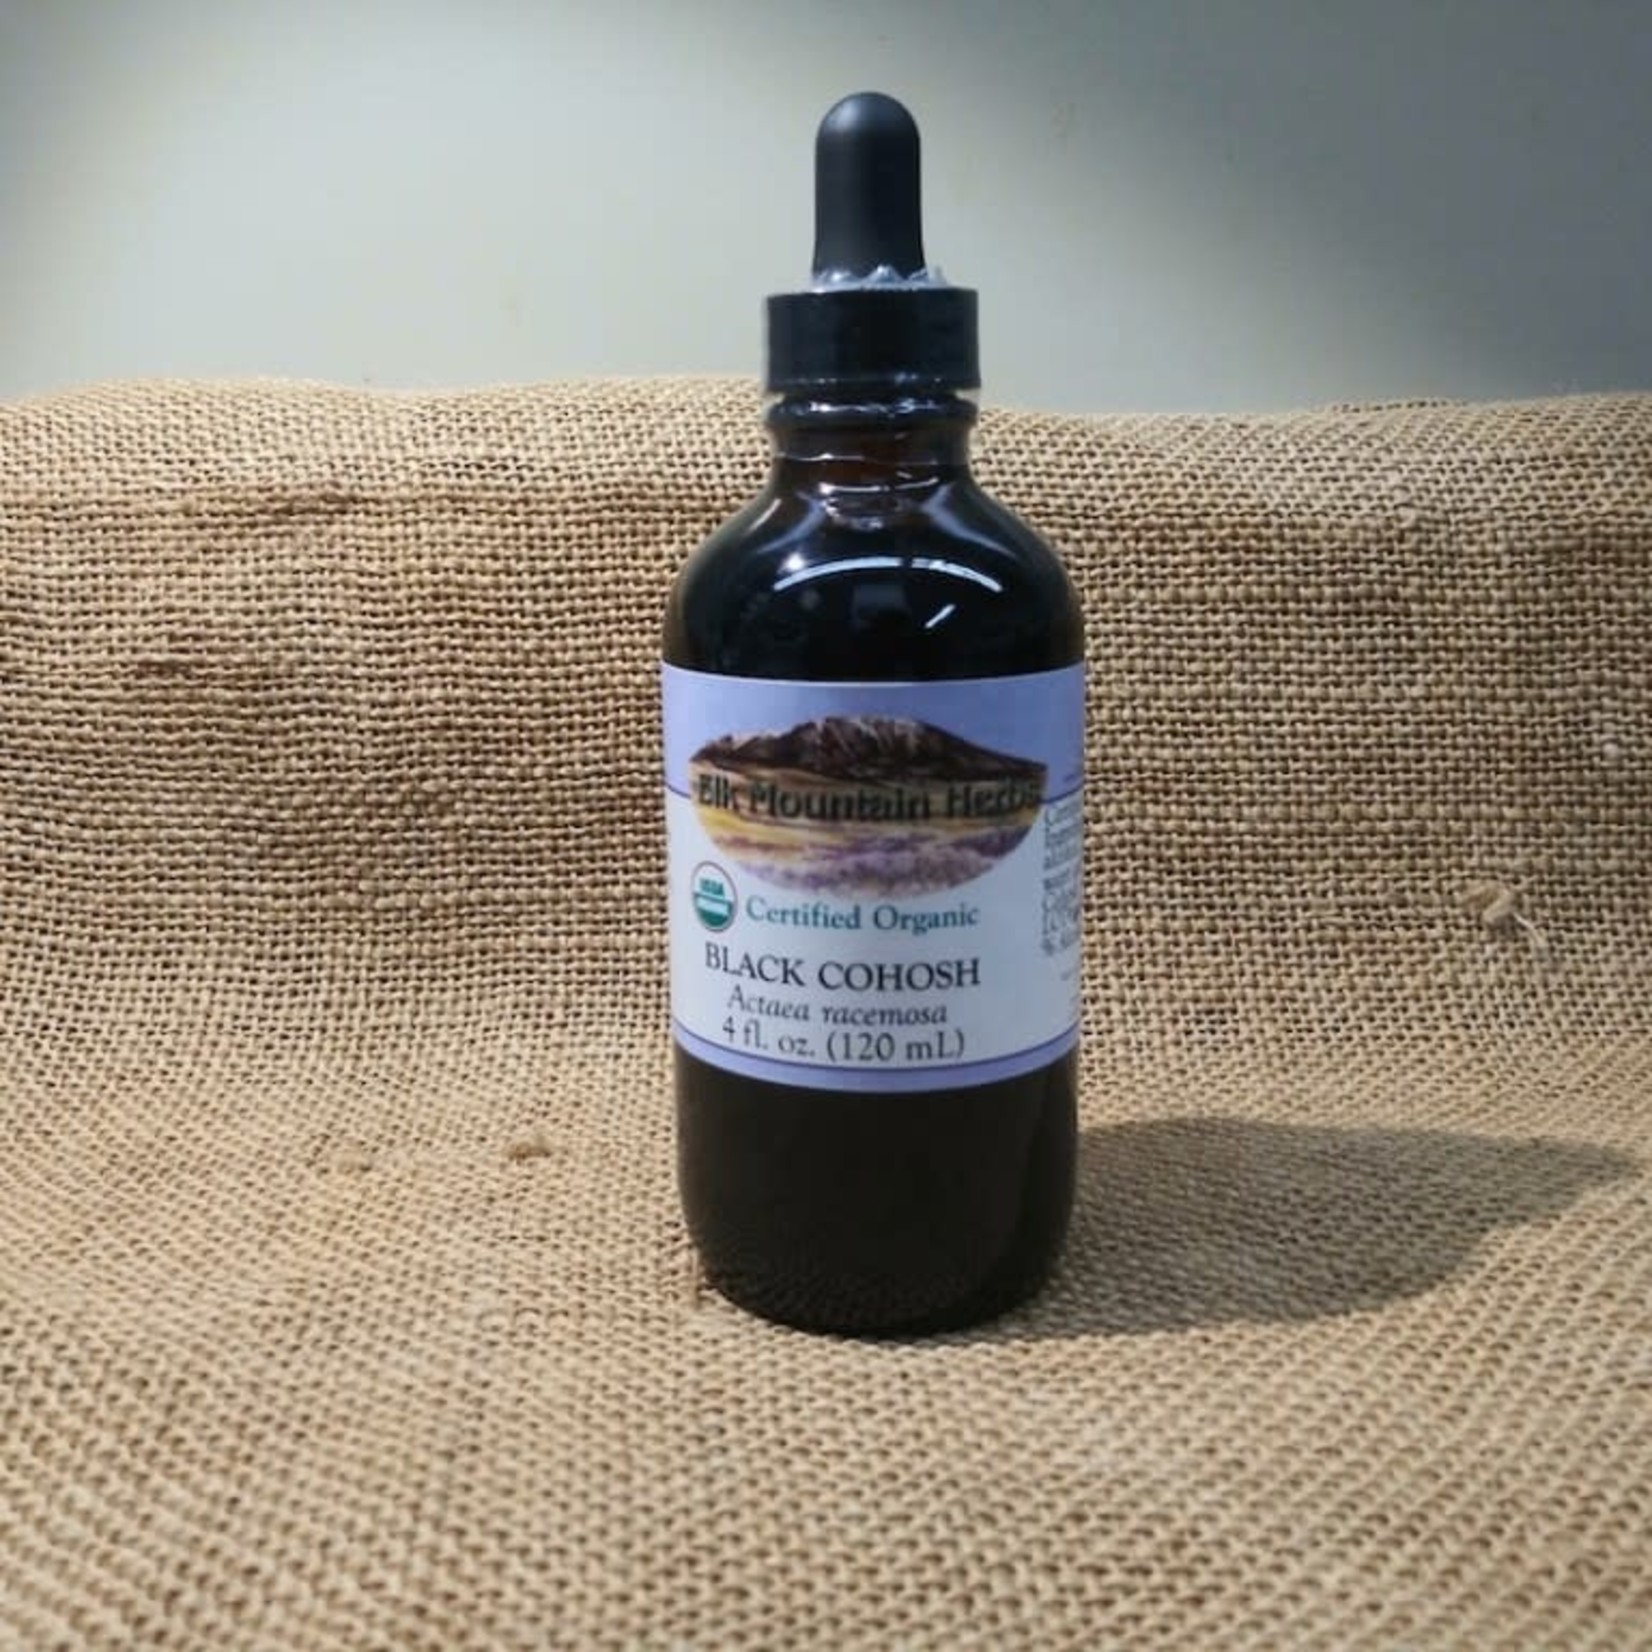 Elk Mountain Herbs Black Cohosh Tincture, Certified Organic